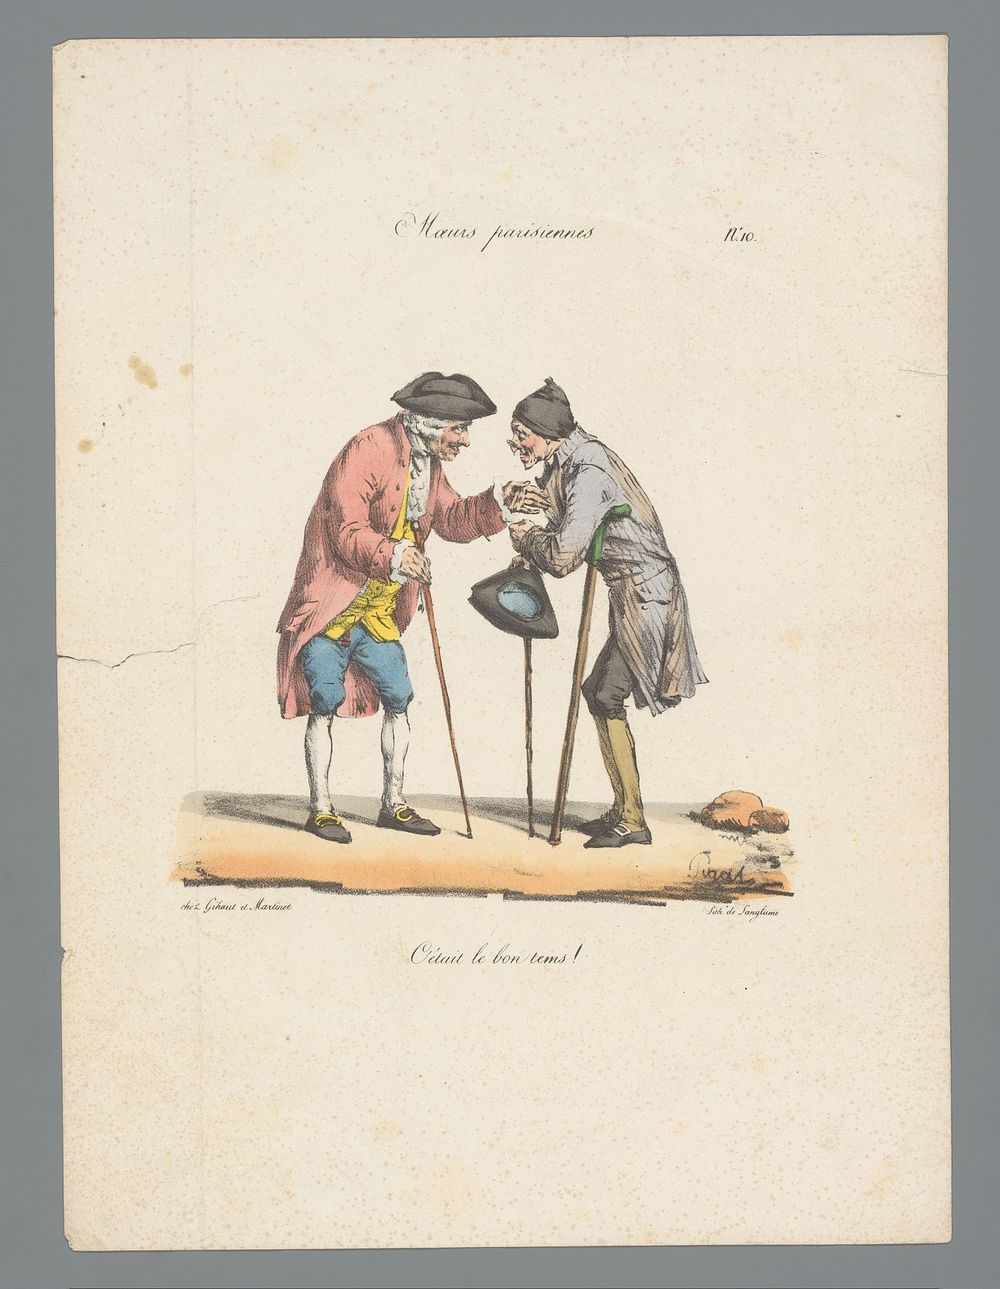 Twee oude mannen in gesprek (1824 - 1825) by Edme Jean Pigal, Pierre Langlumé and Gihaut et Martinet